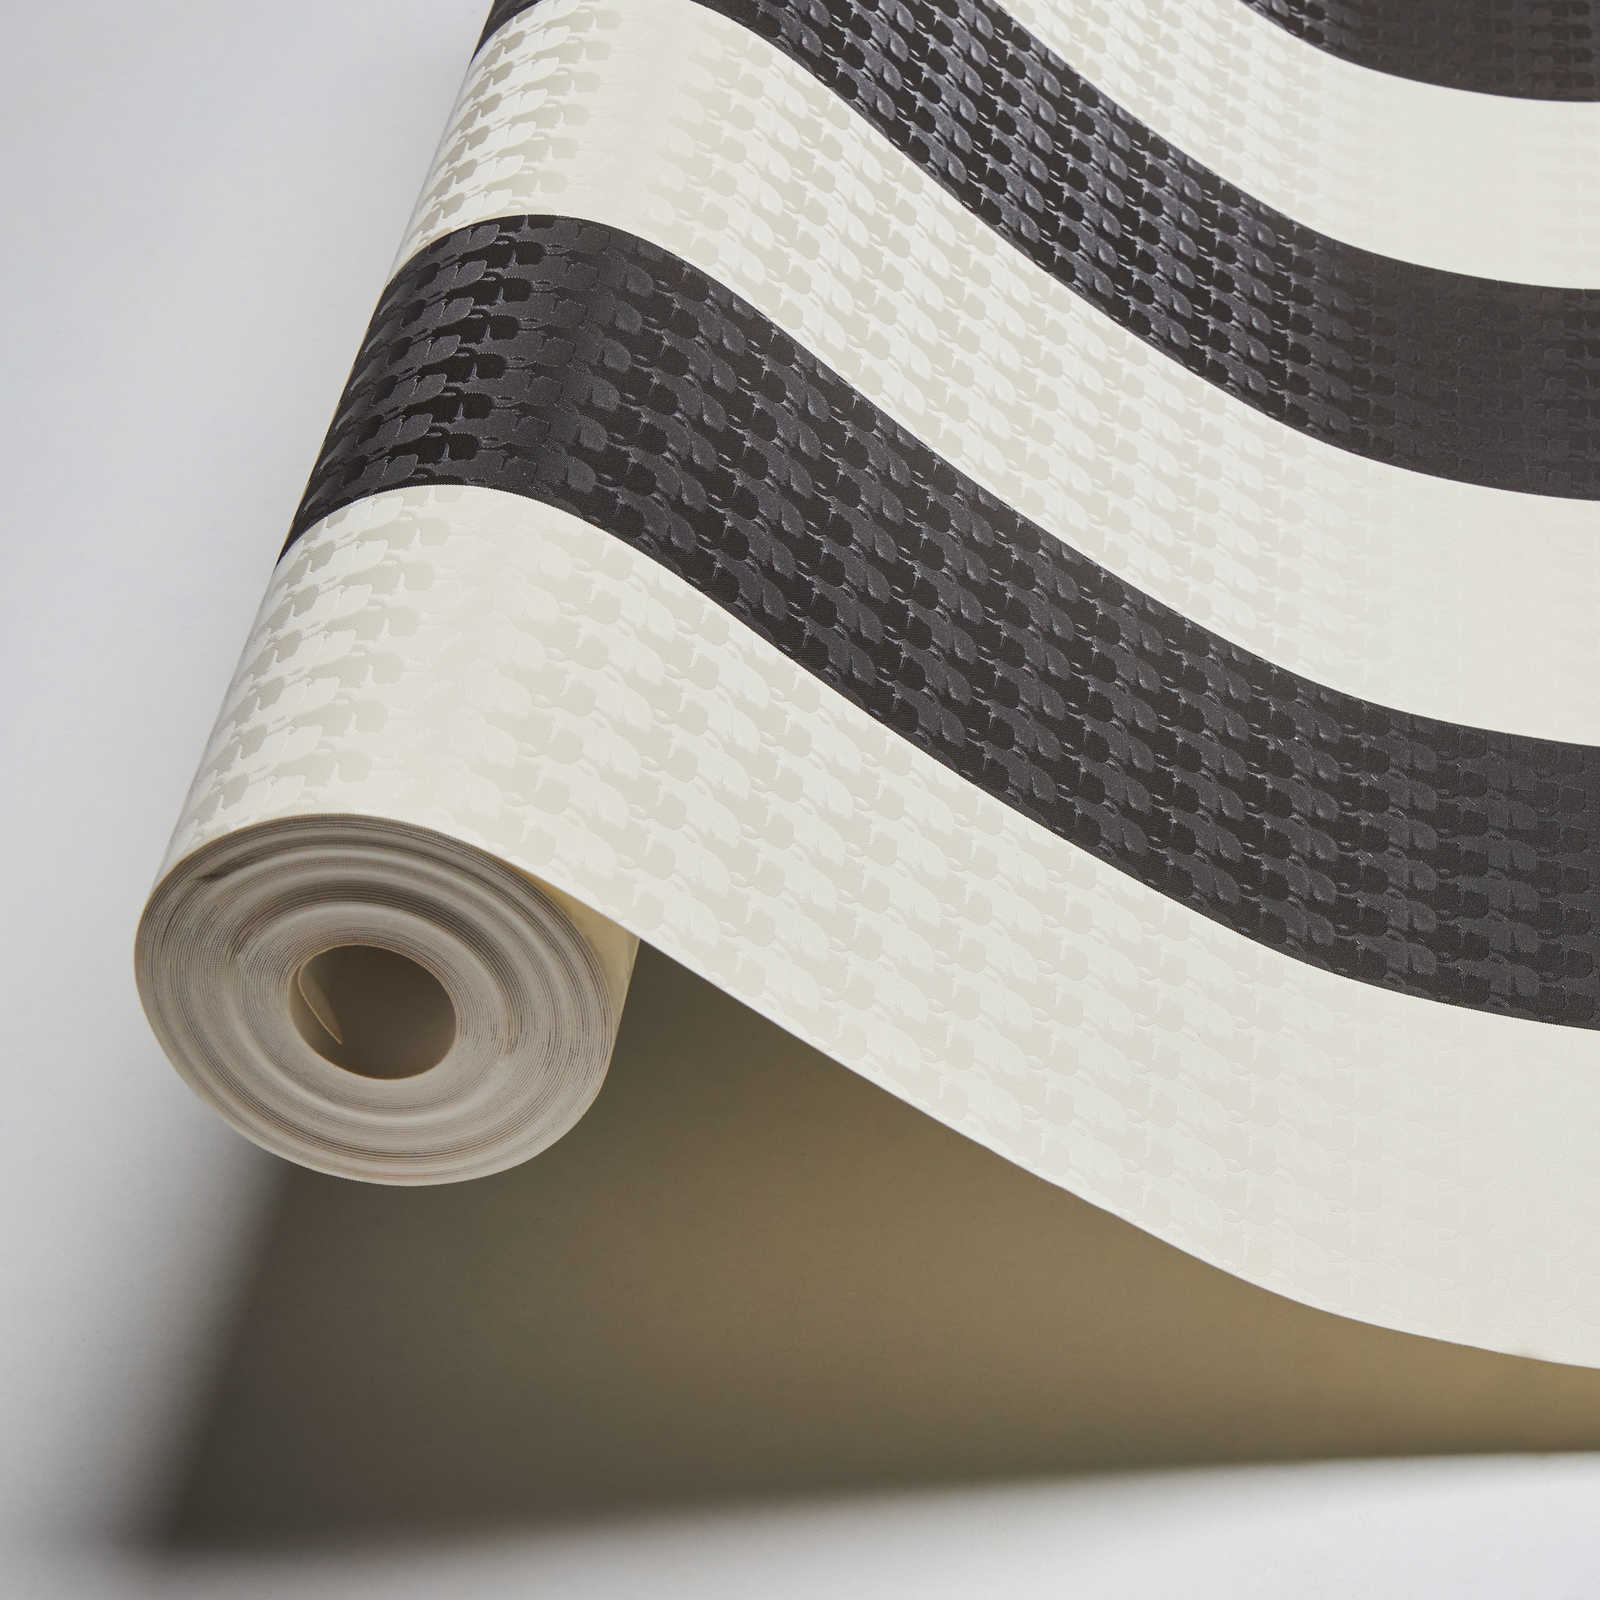             Karl LAGERFELD behangpapier streep & textuur patroon - zwart, wit
        